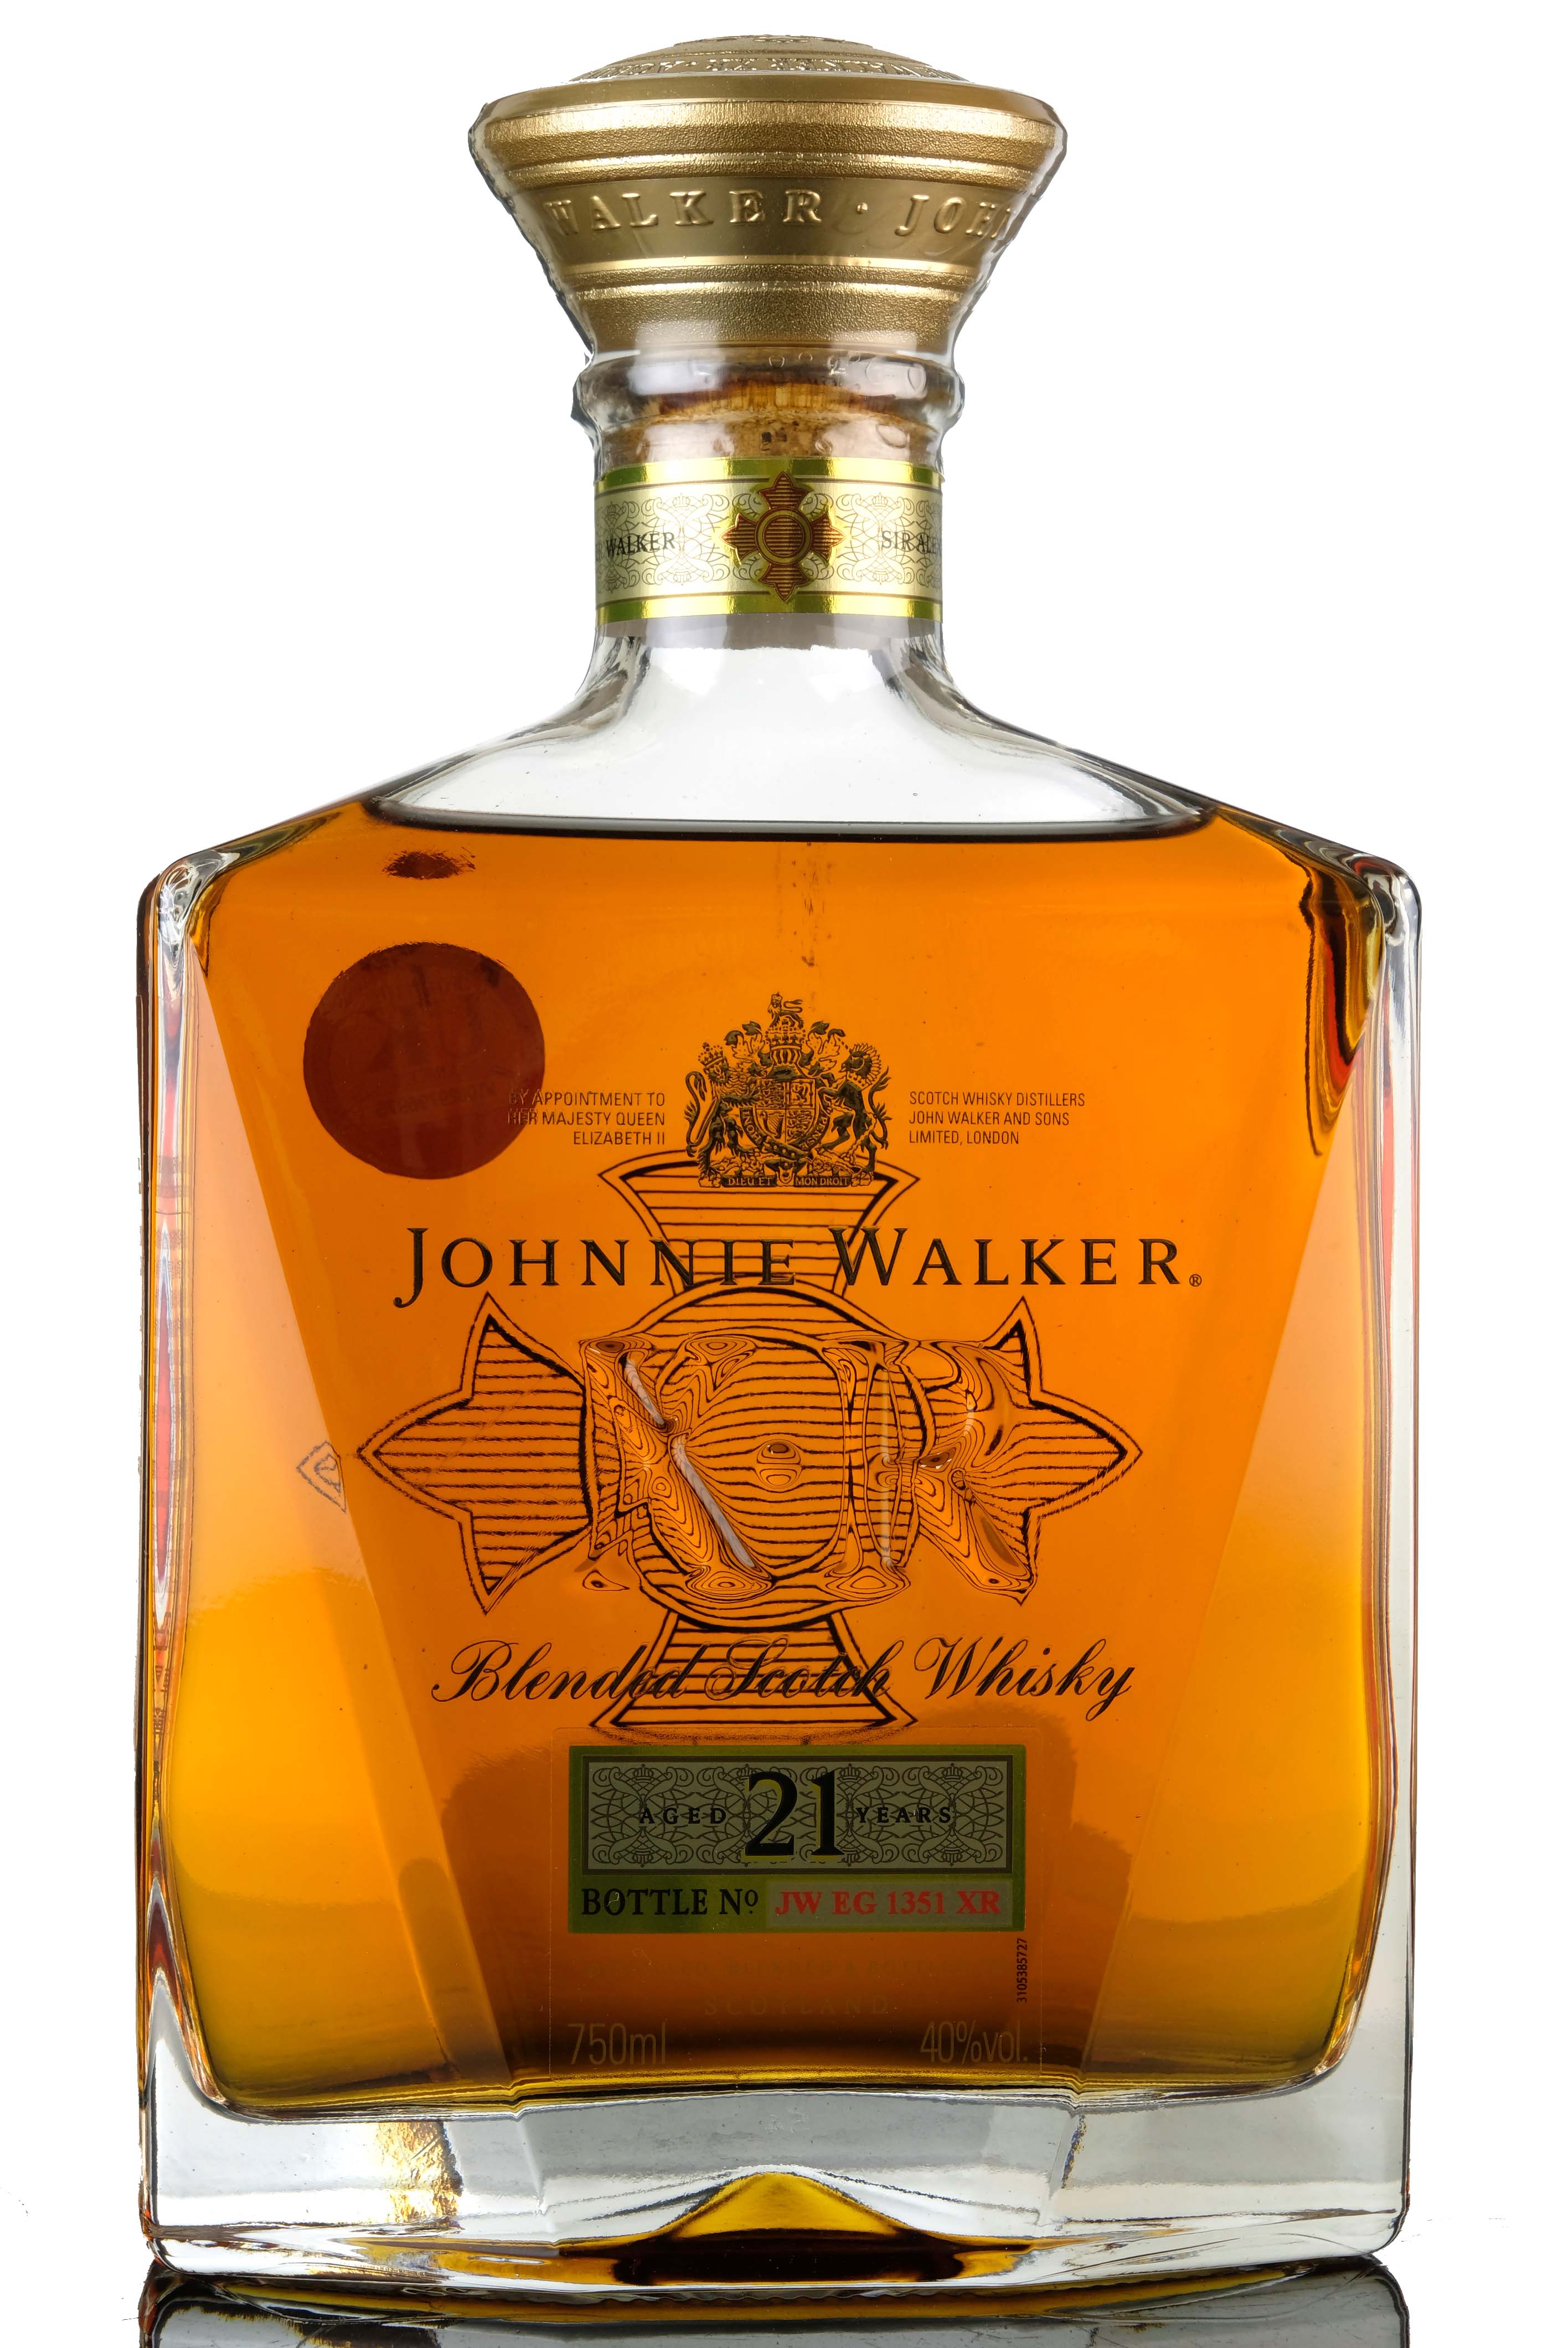 Johnnie Walker 21 Year Old - XR